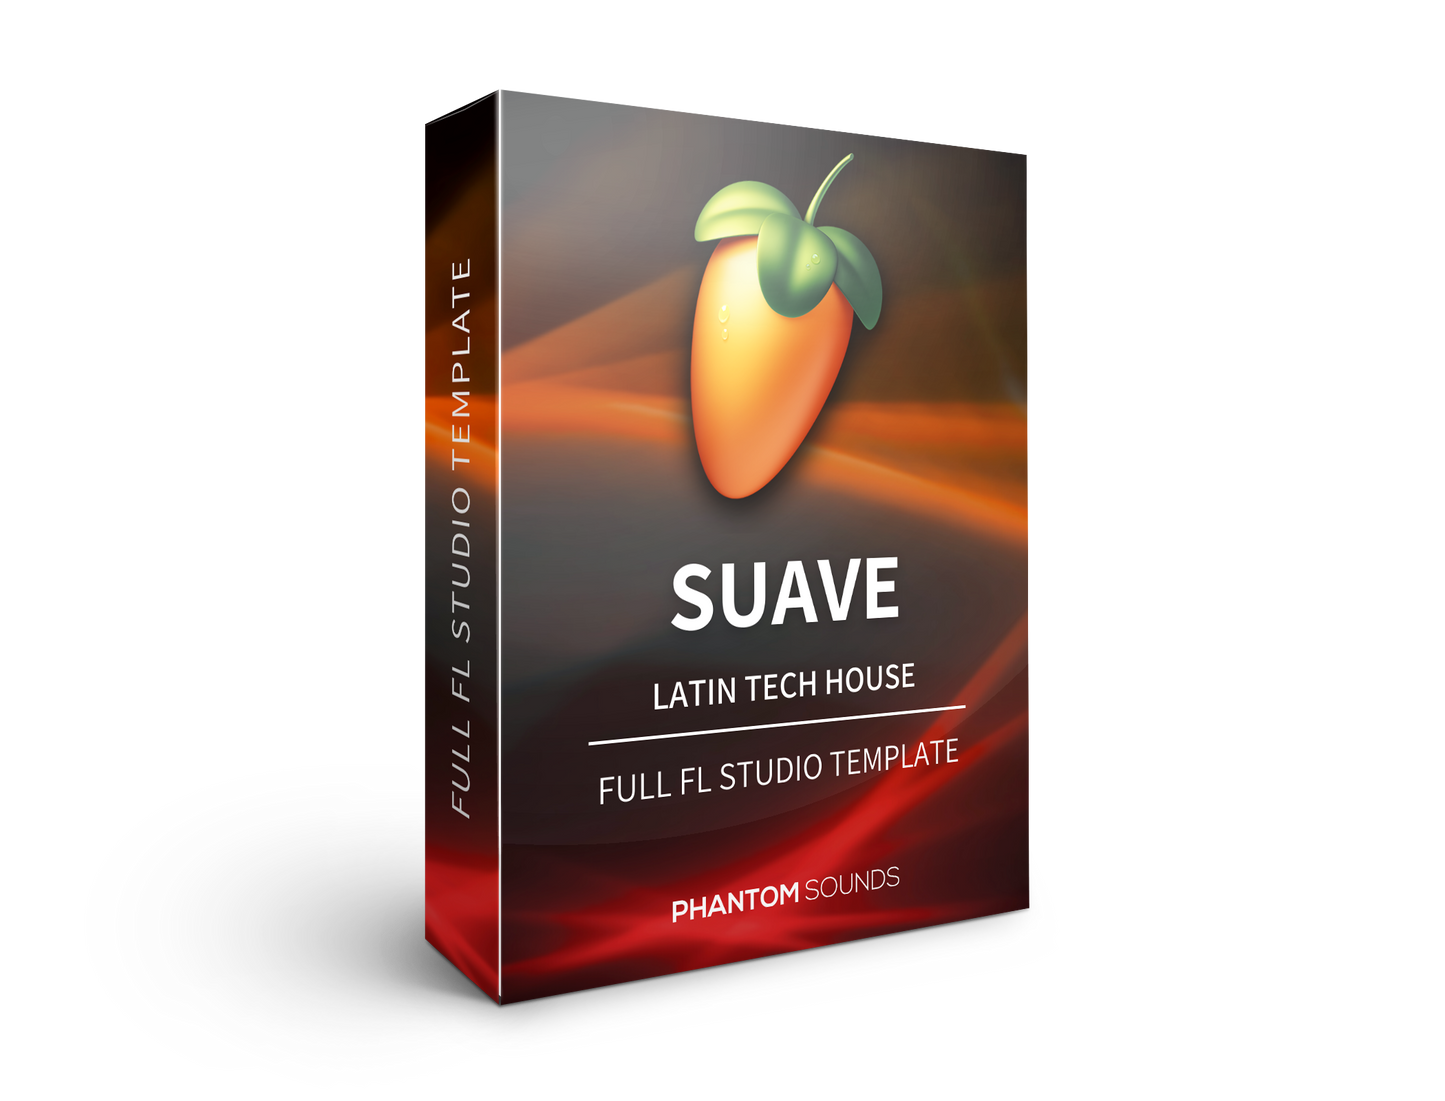 Suave - Latin Tech House FL Studio Template